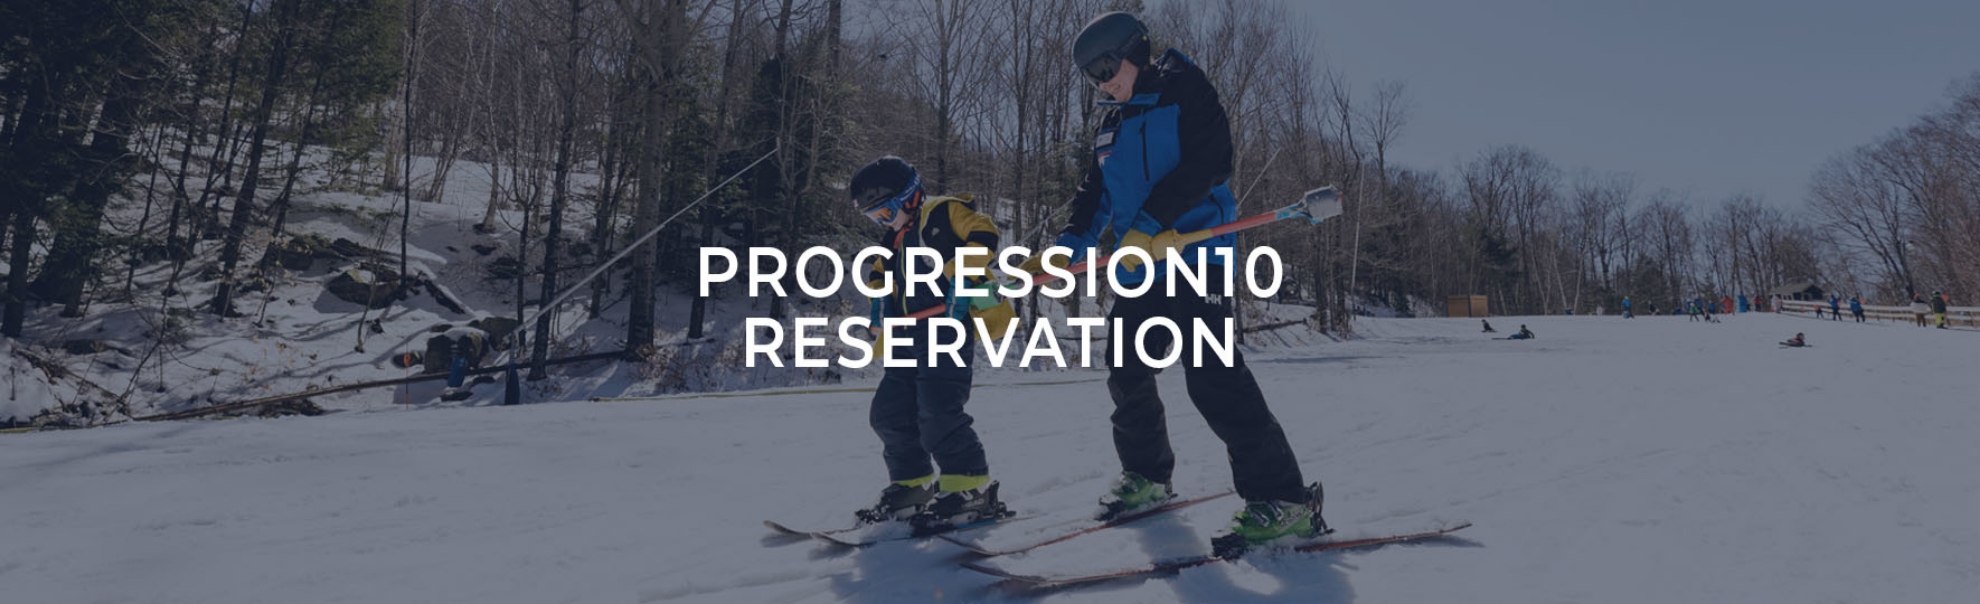 Progression10 Reservation